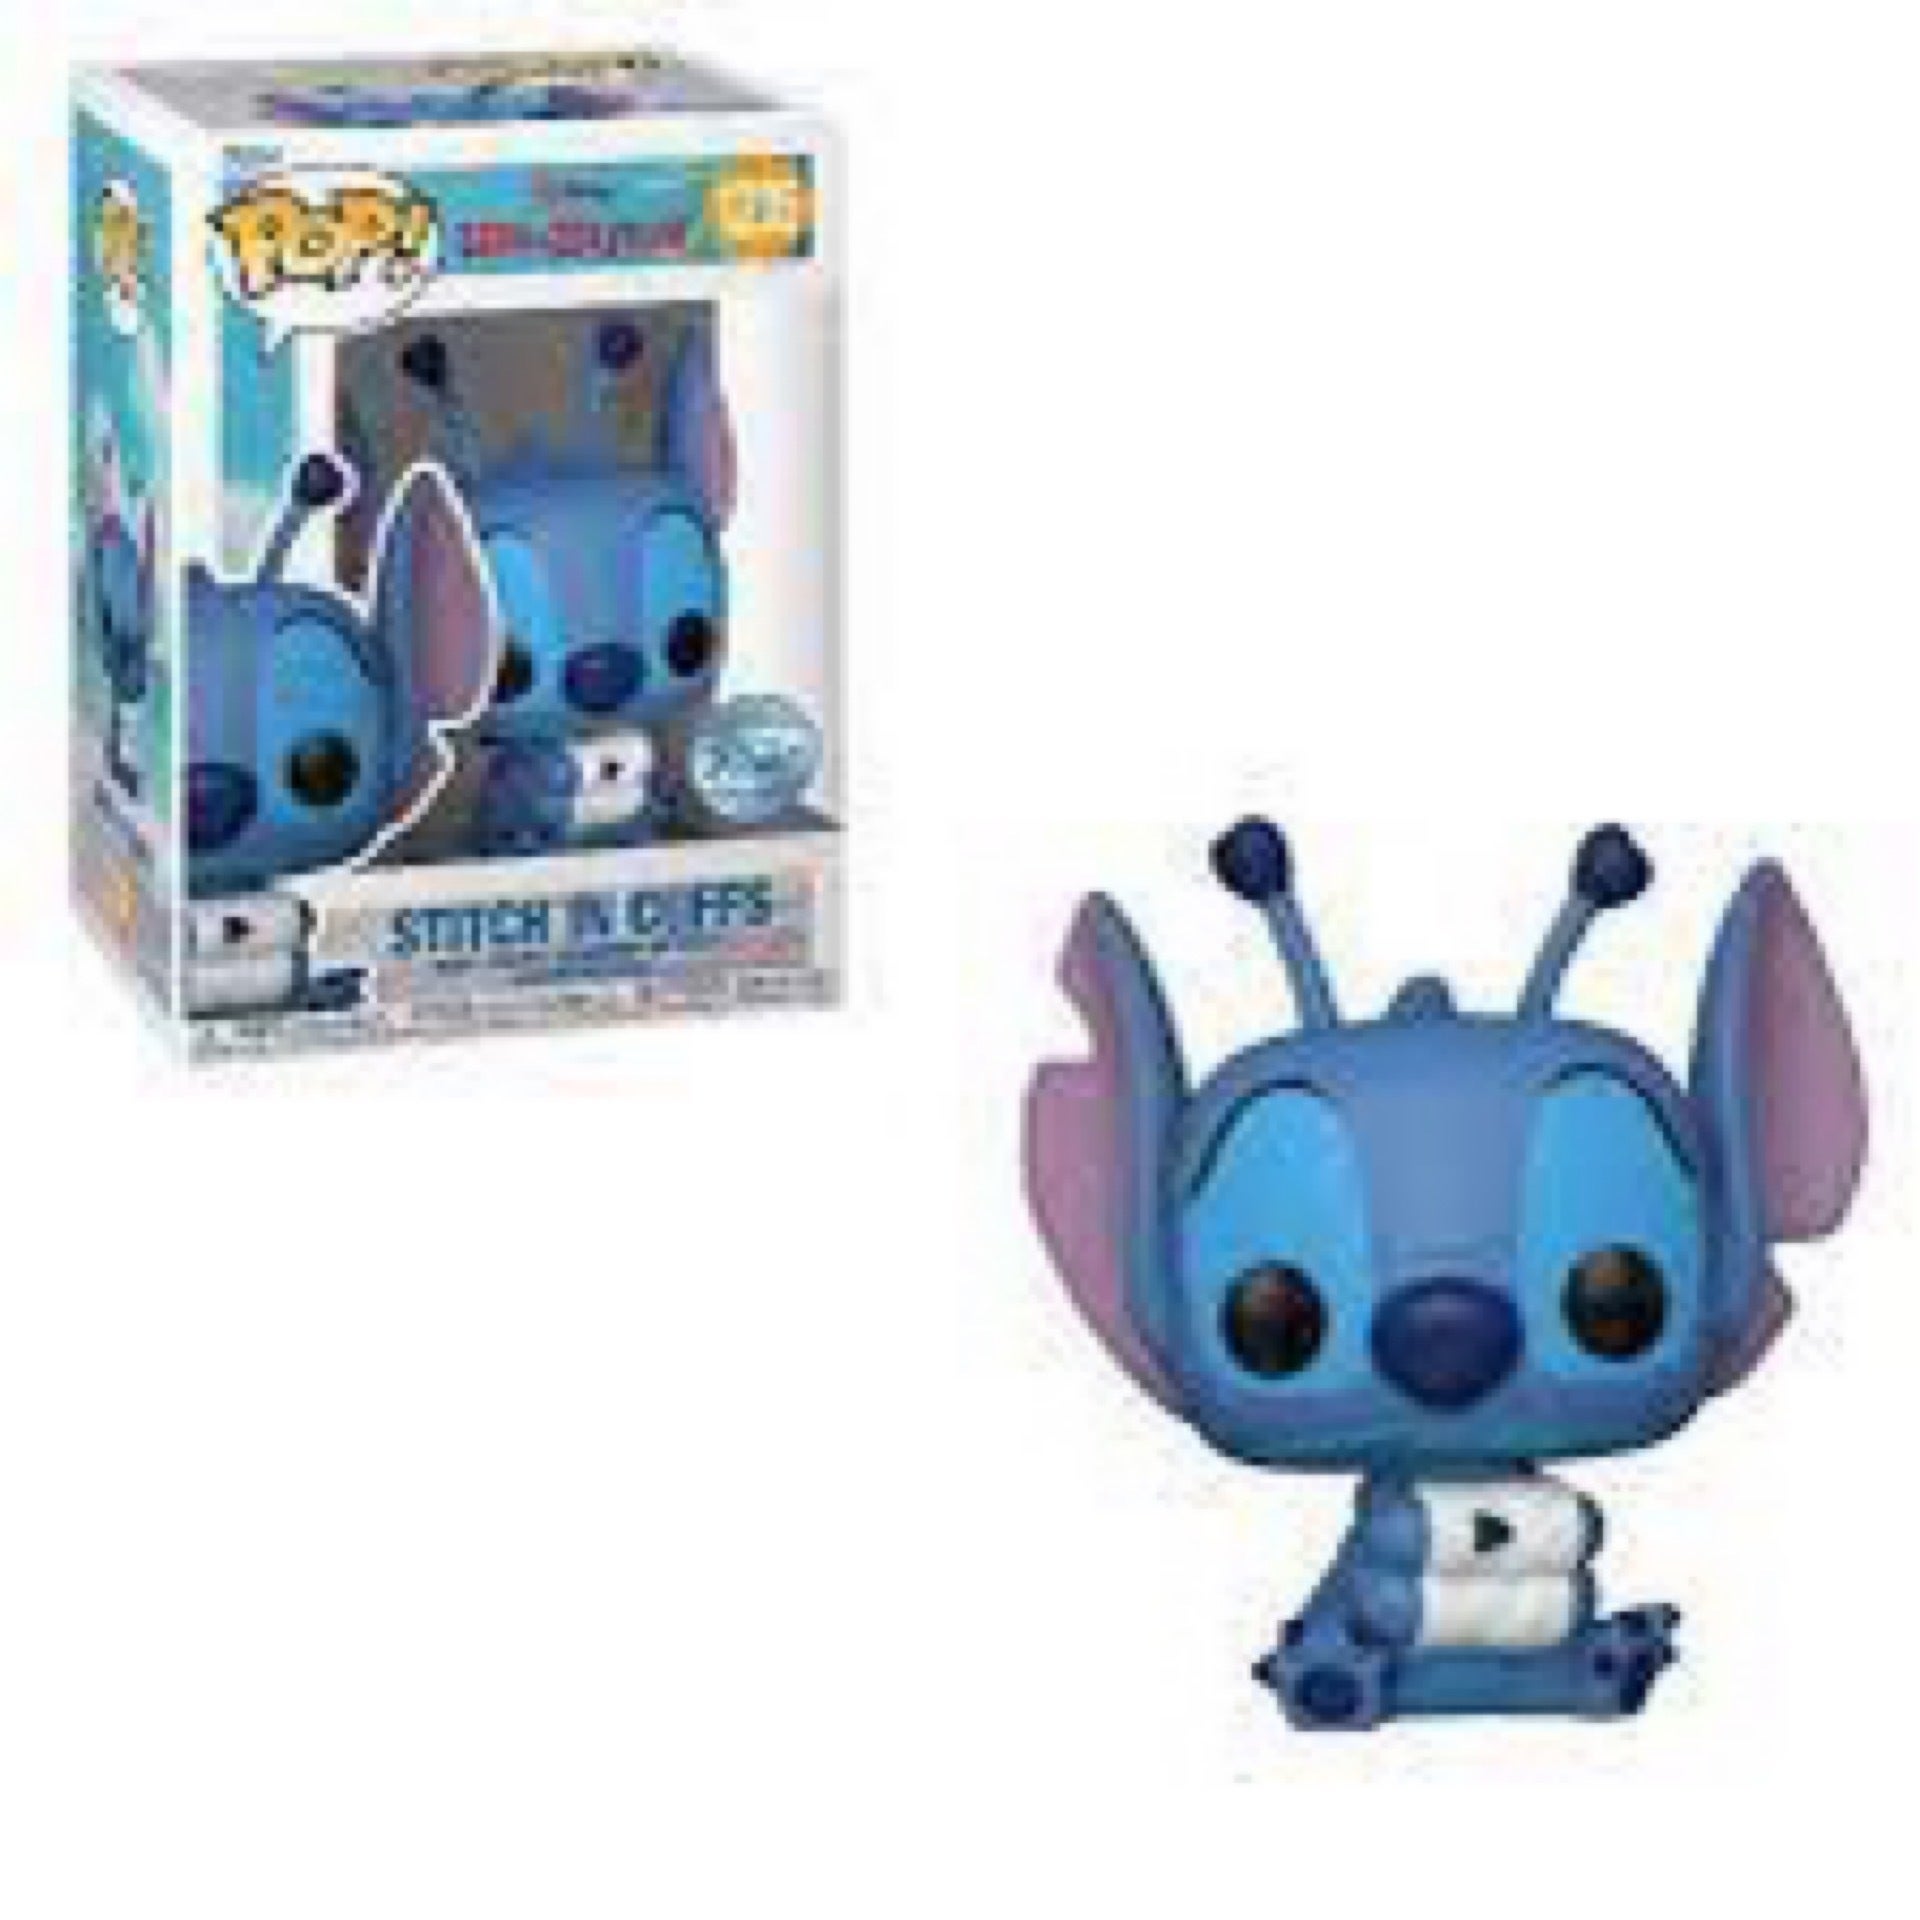 Funko Pop! Disney Lilo & Stitch (Stitch in Cuffs) FYE Exclusive Figure  #1235 - US